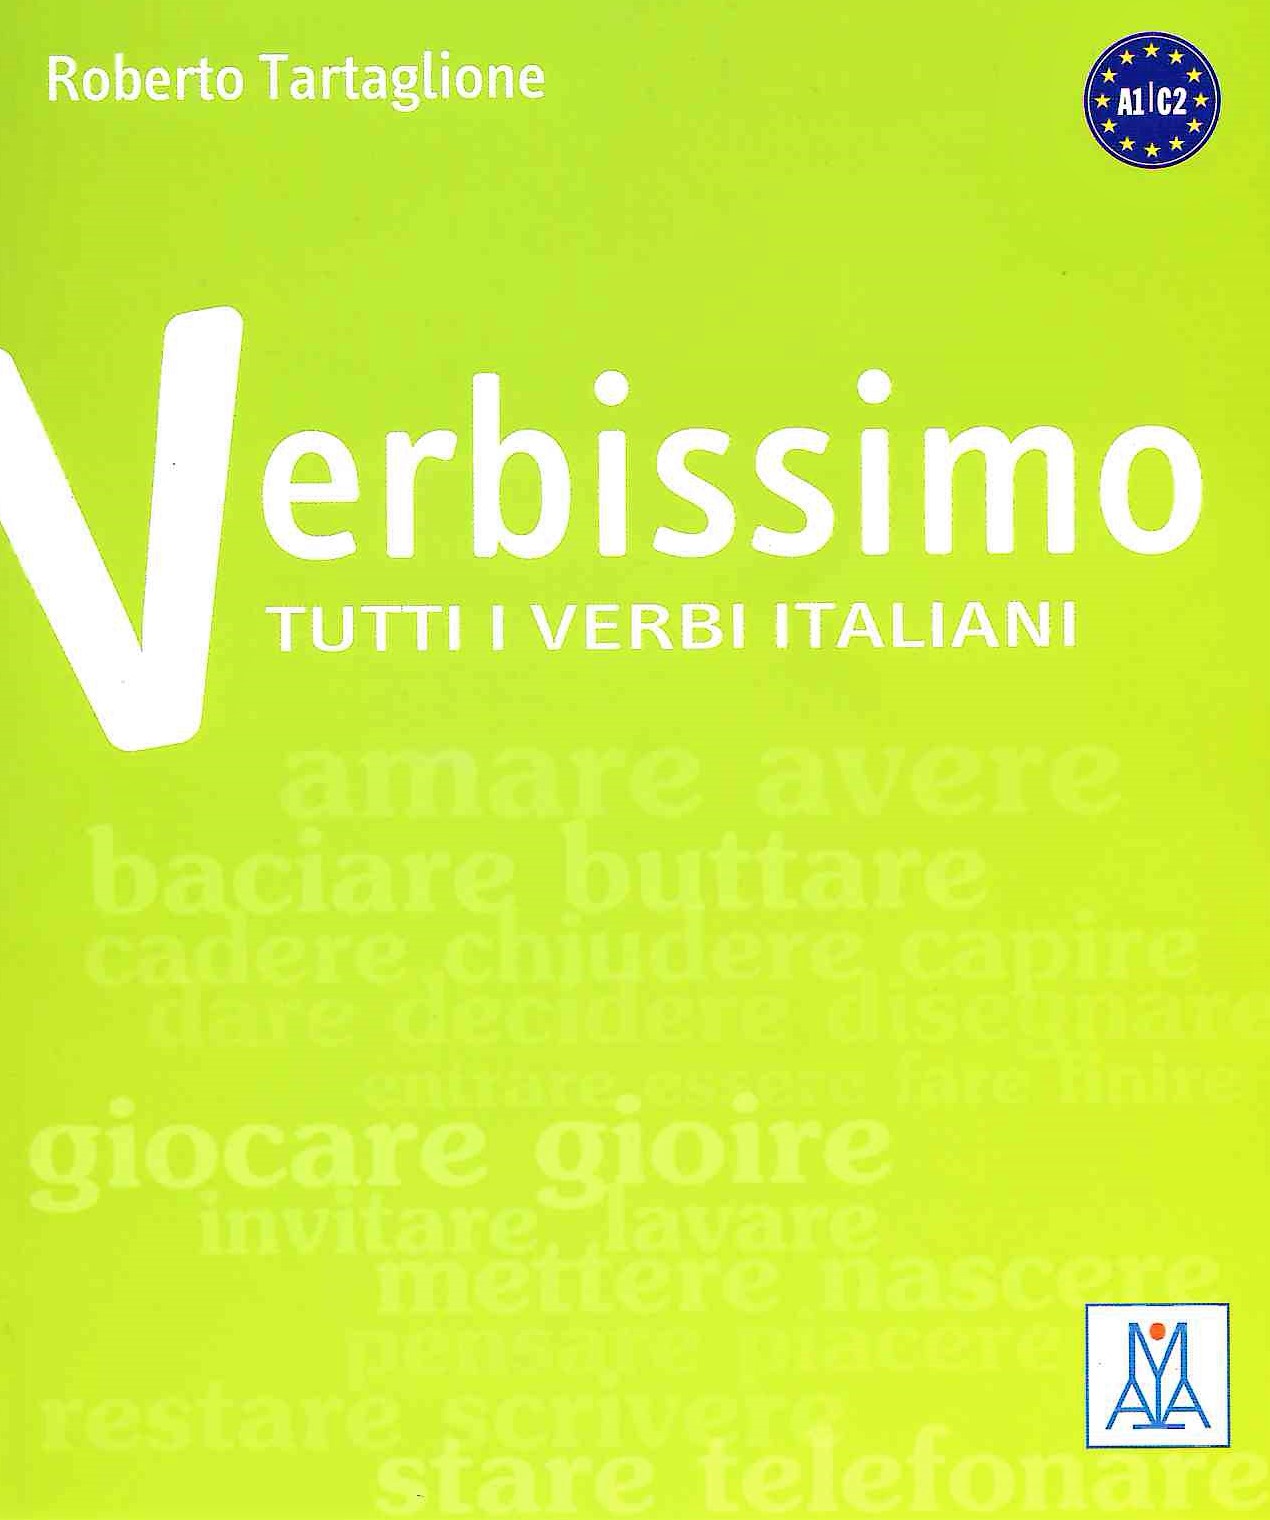 Verbissimo Tutti i verbi italiani / Сборник глаголов